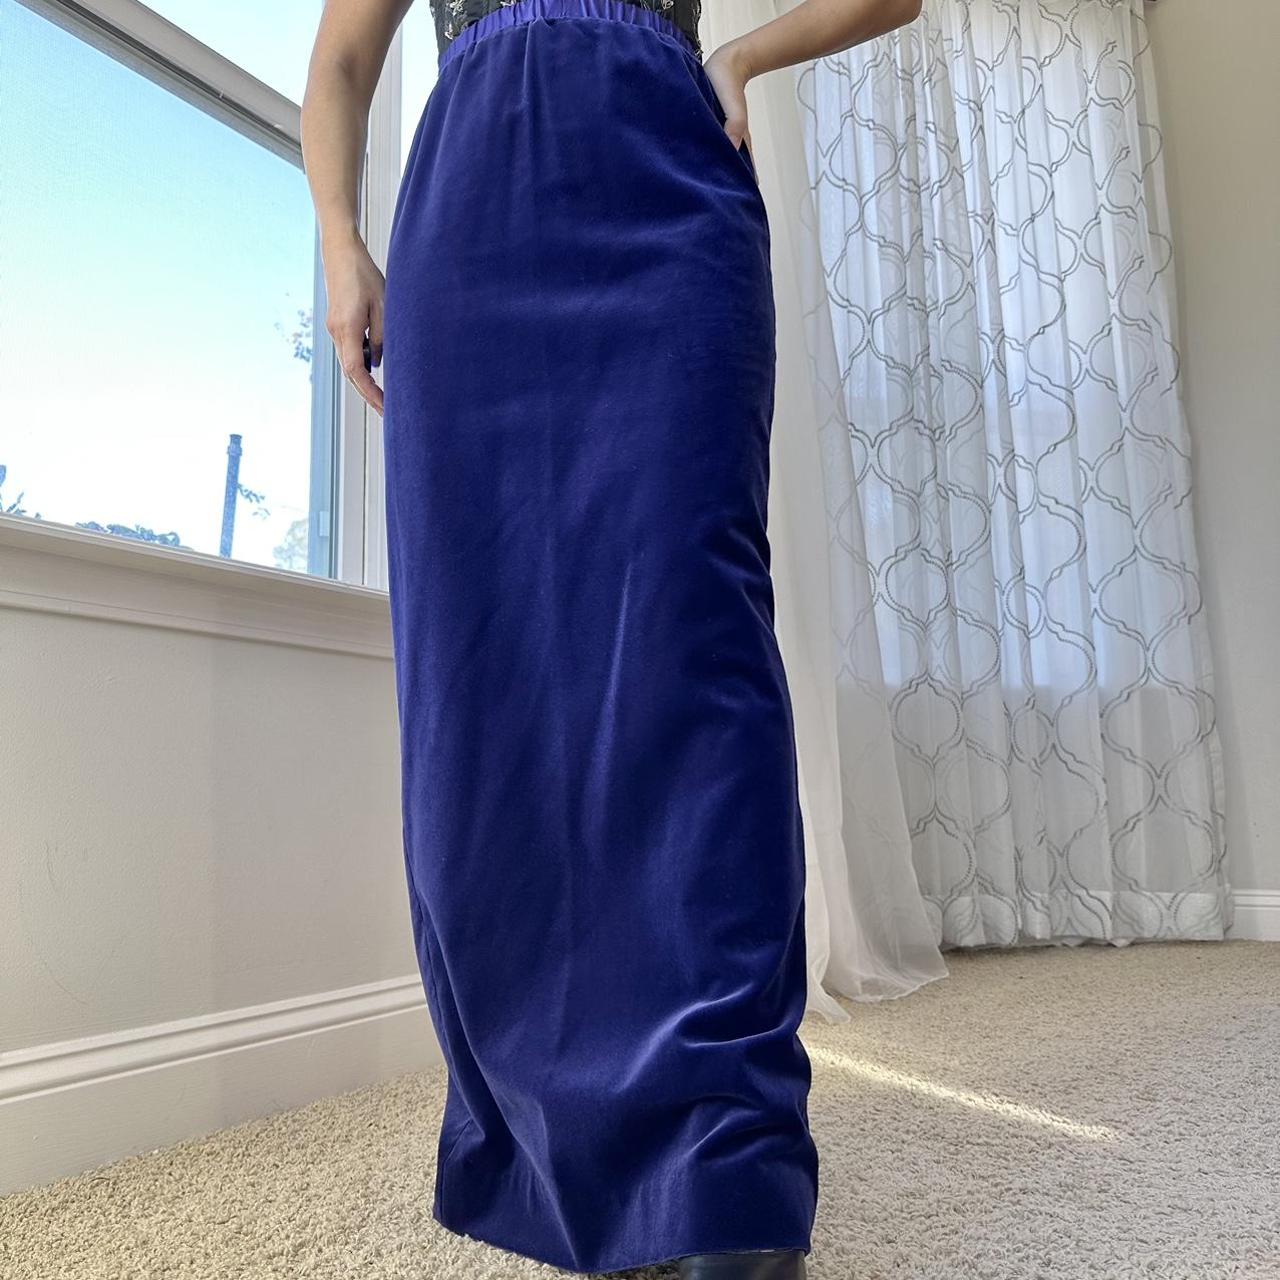 Women's Purple and Blue Skirt